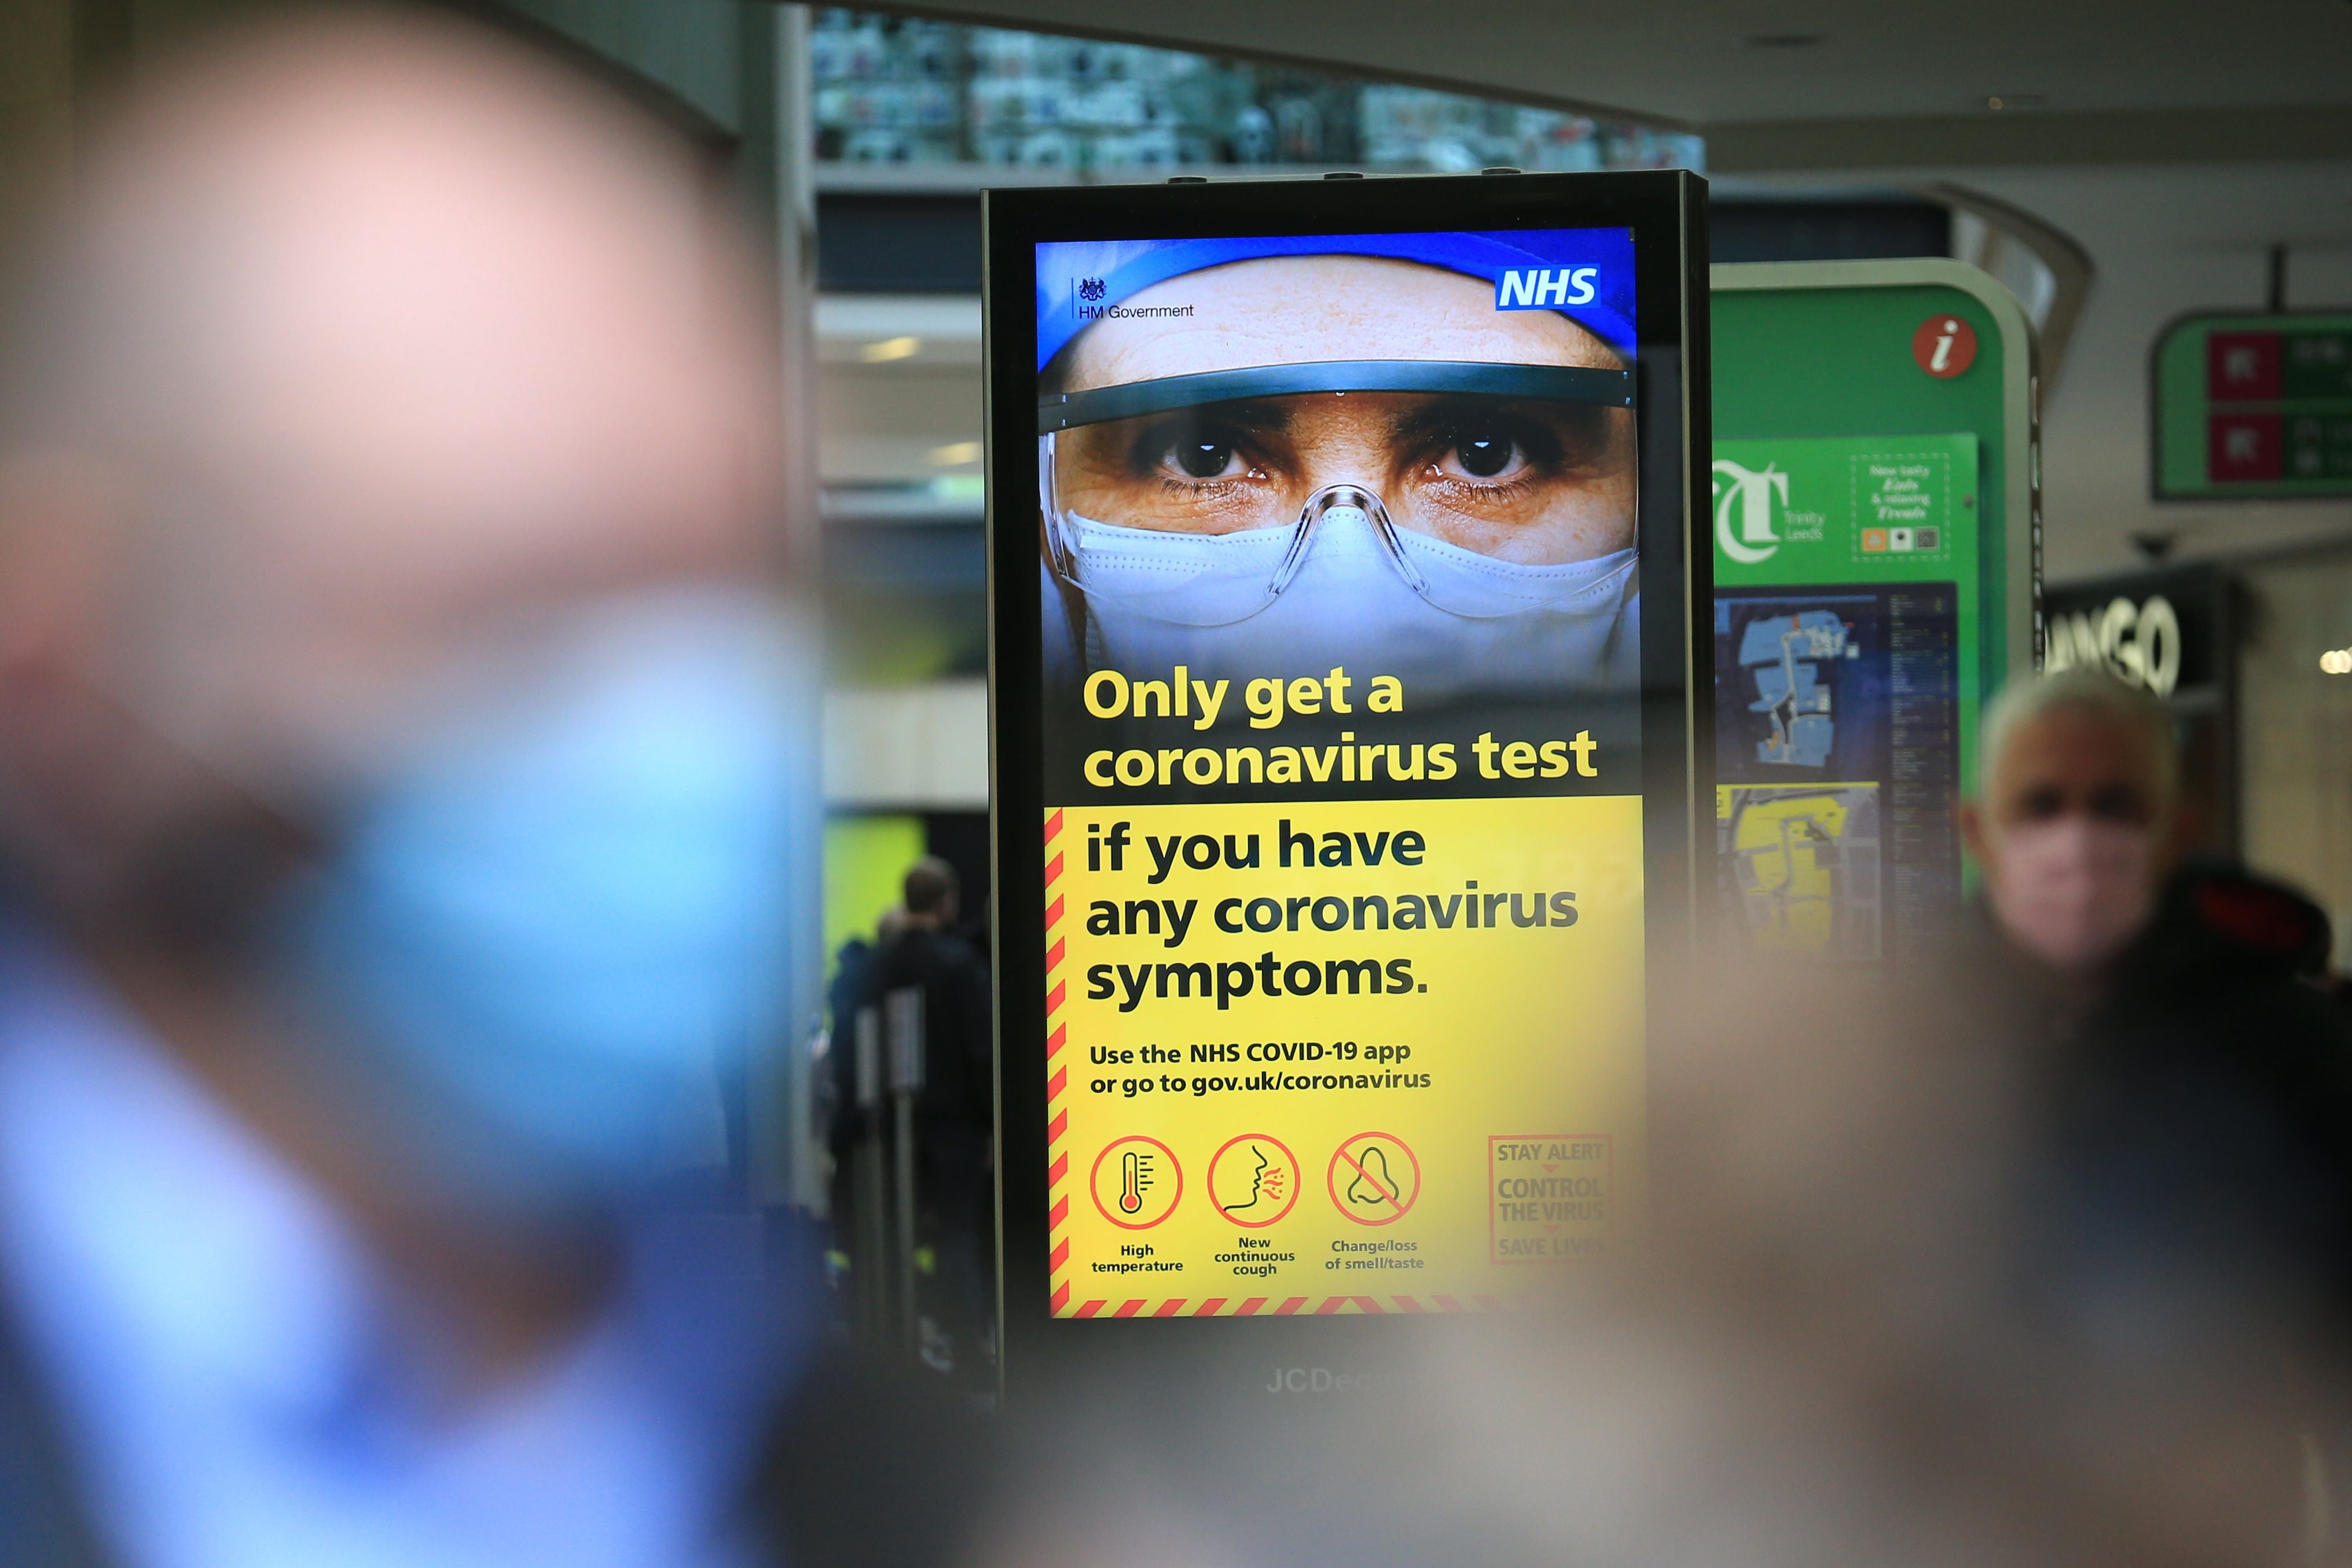 A digital display shows NHS health advice on the coronavirus